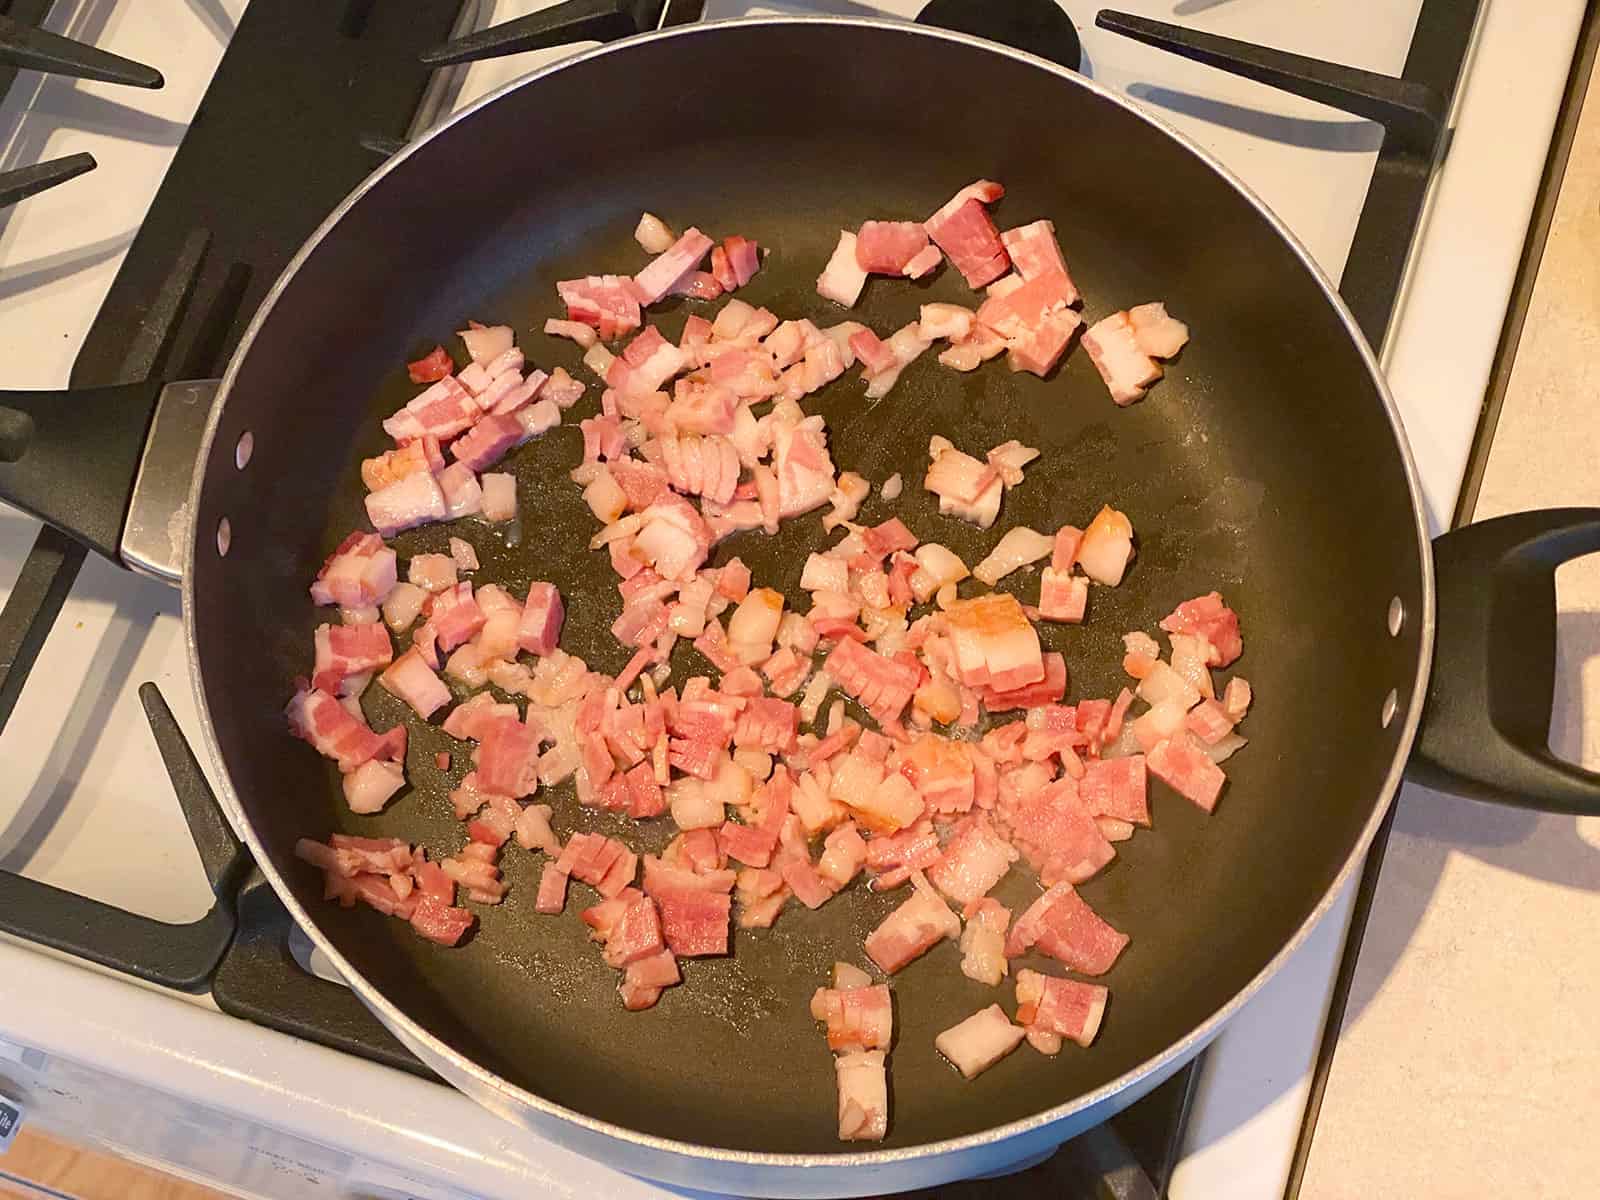 Bacon frying in a pan